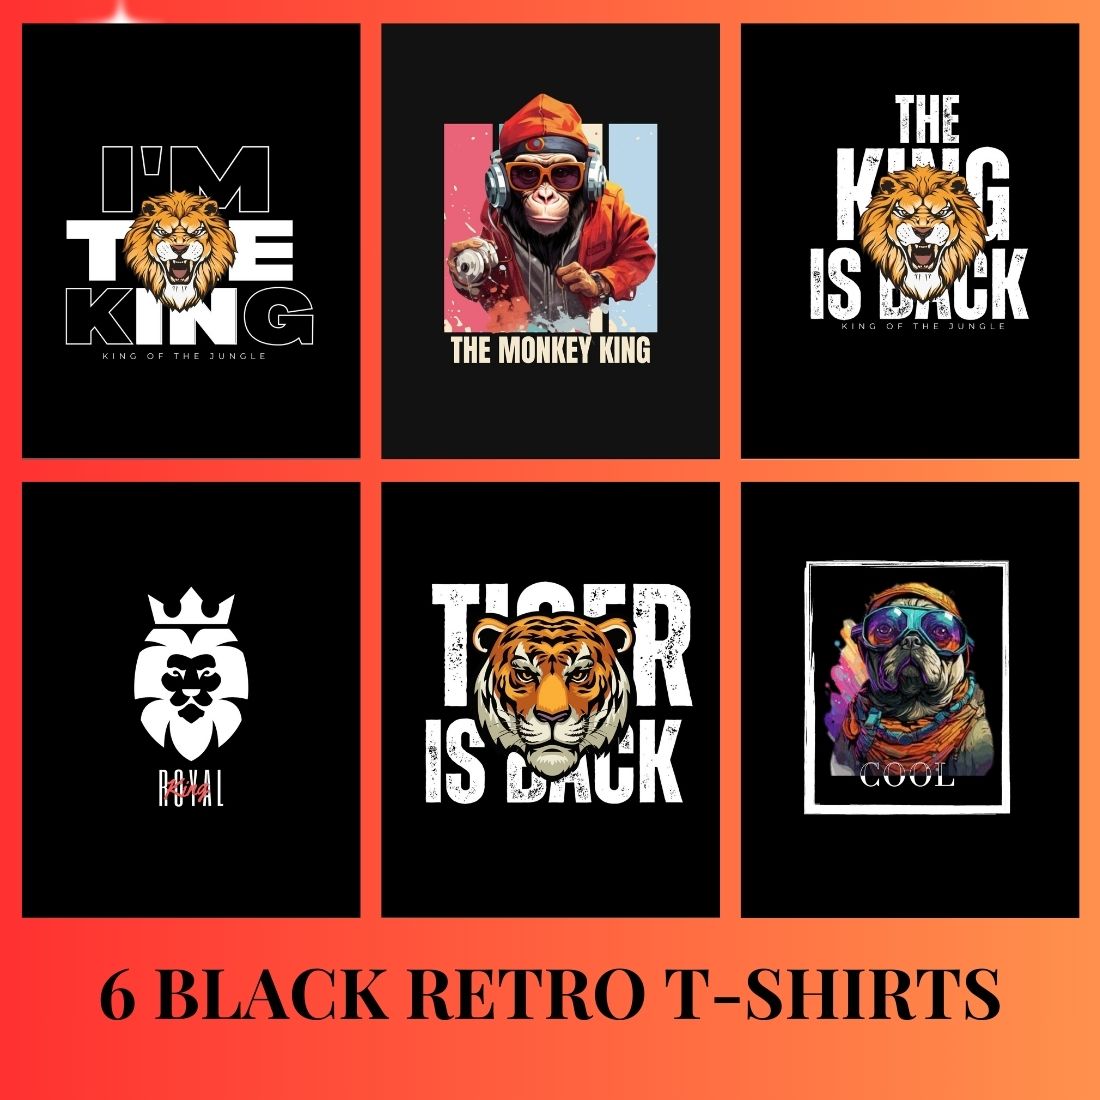 Black Retro T-Shirt cover image.